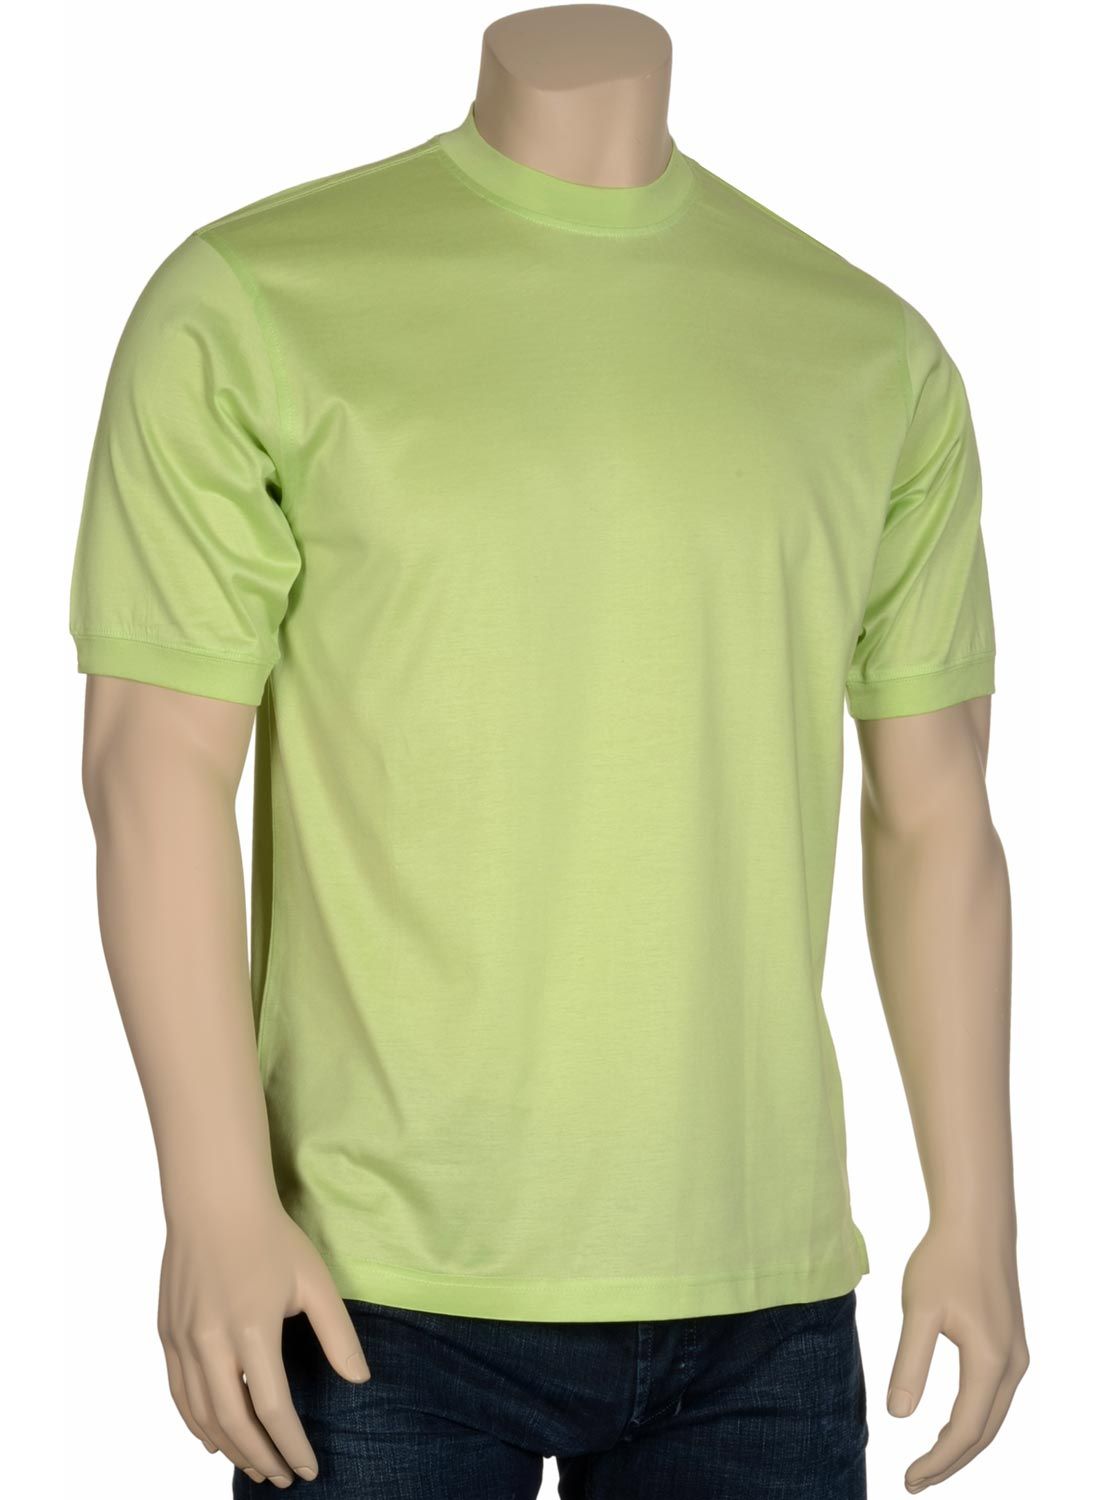 Tricots St Raphael Mens T Shirt Small s Crewneck Green Cotton Tee $45